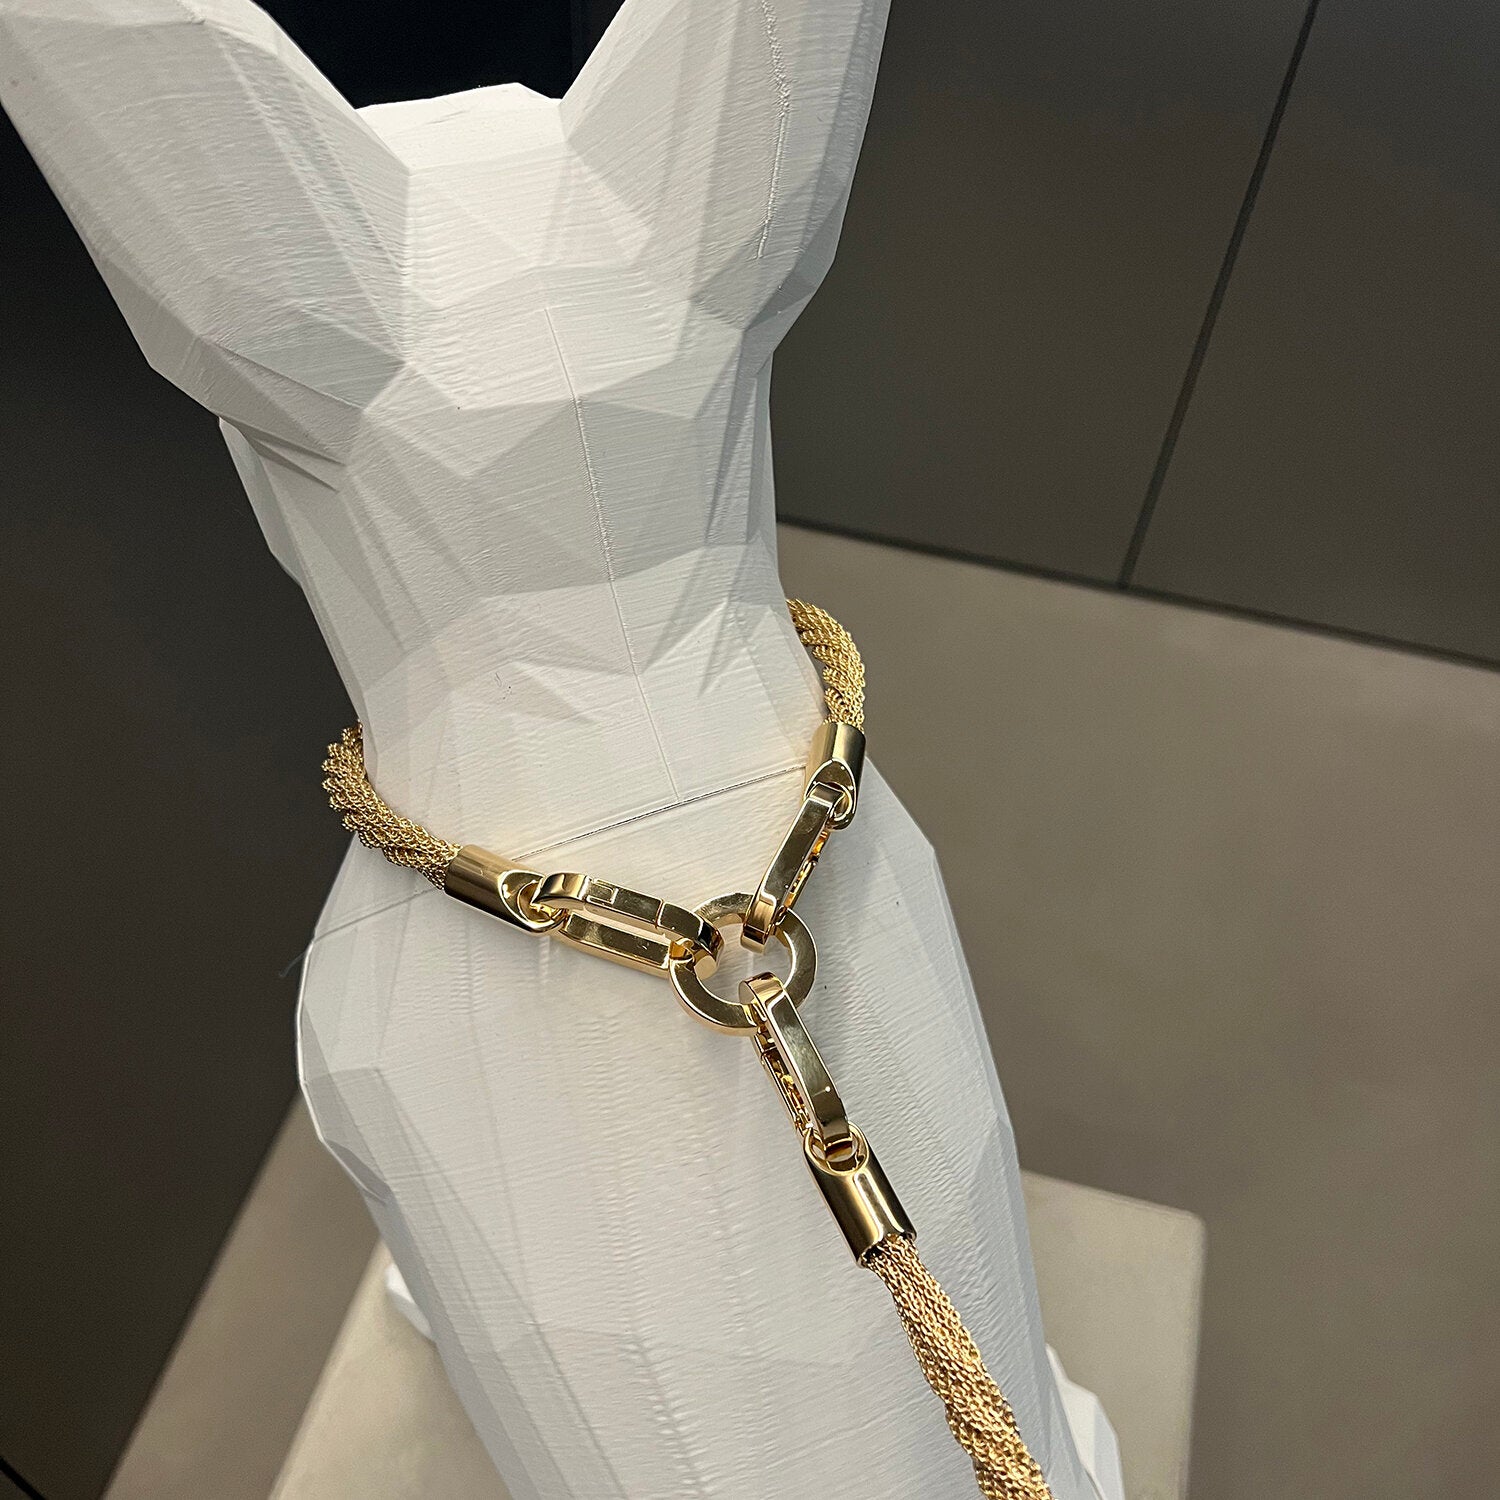 Dog leash in Gold braided